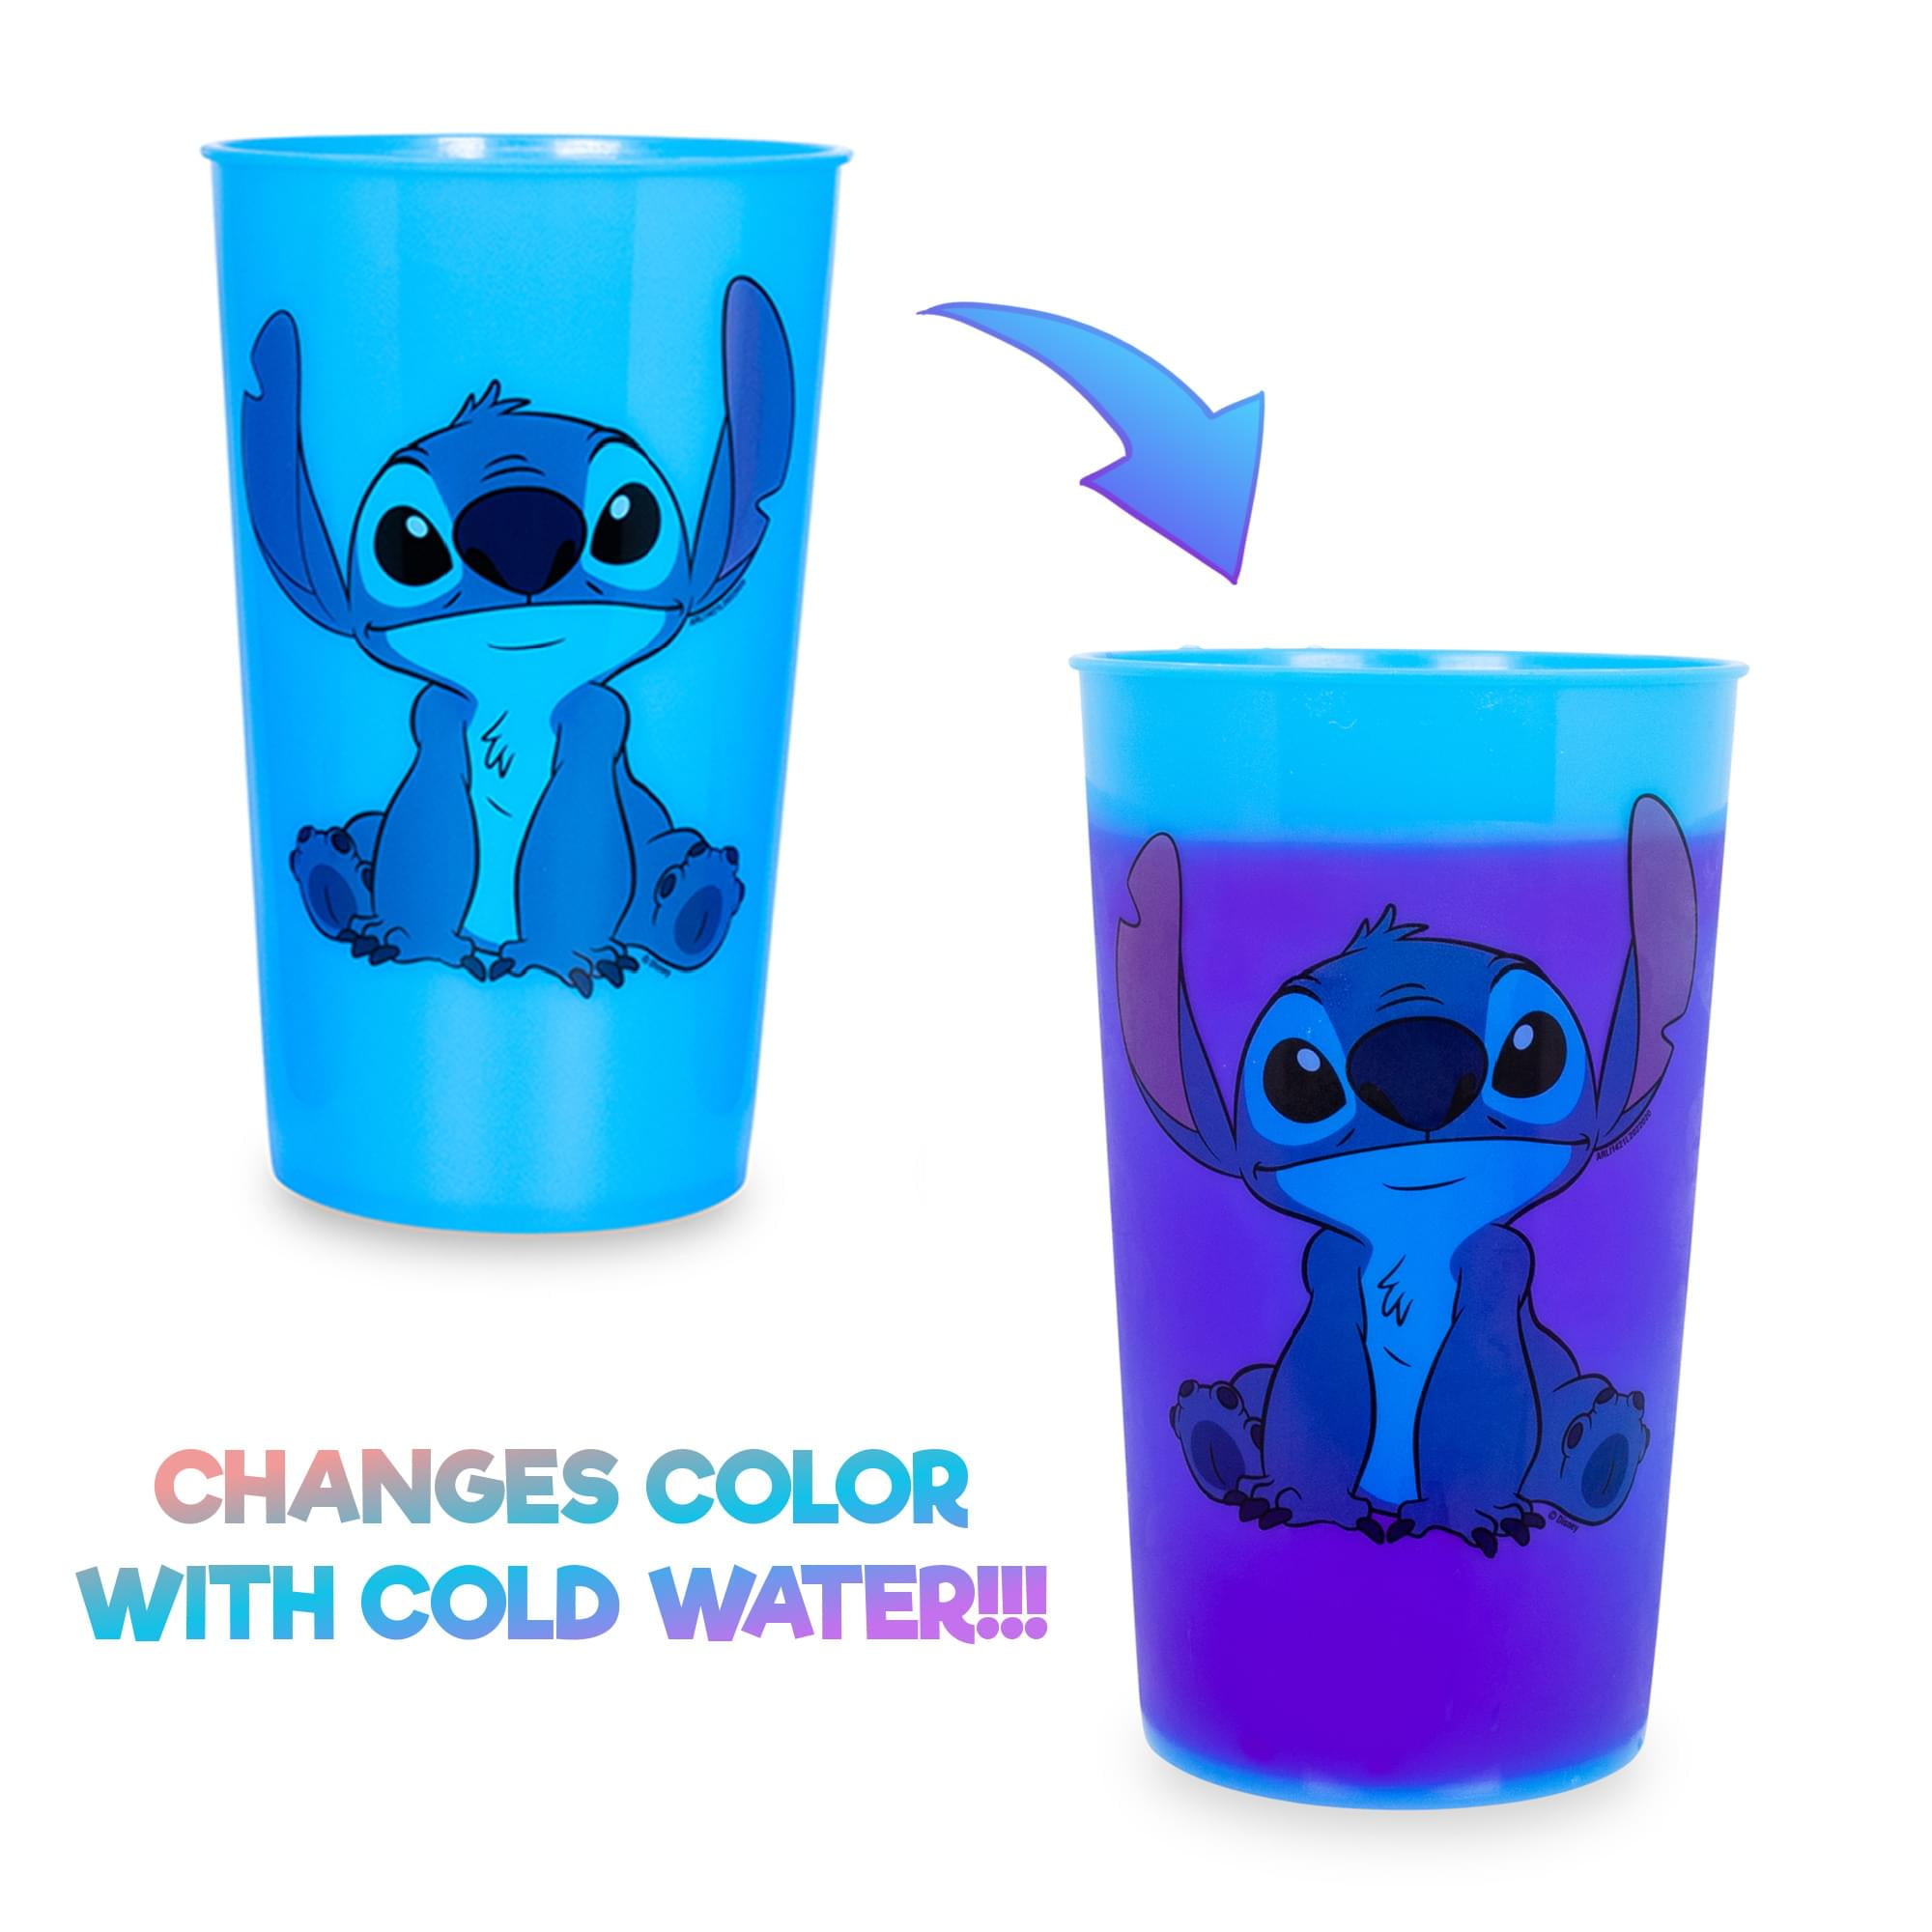 Stitch Disney On Ice Milo And Stitch Plastic Flip Top Drink Cup